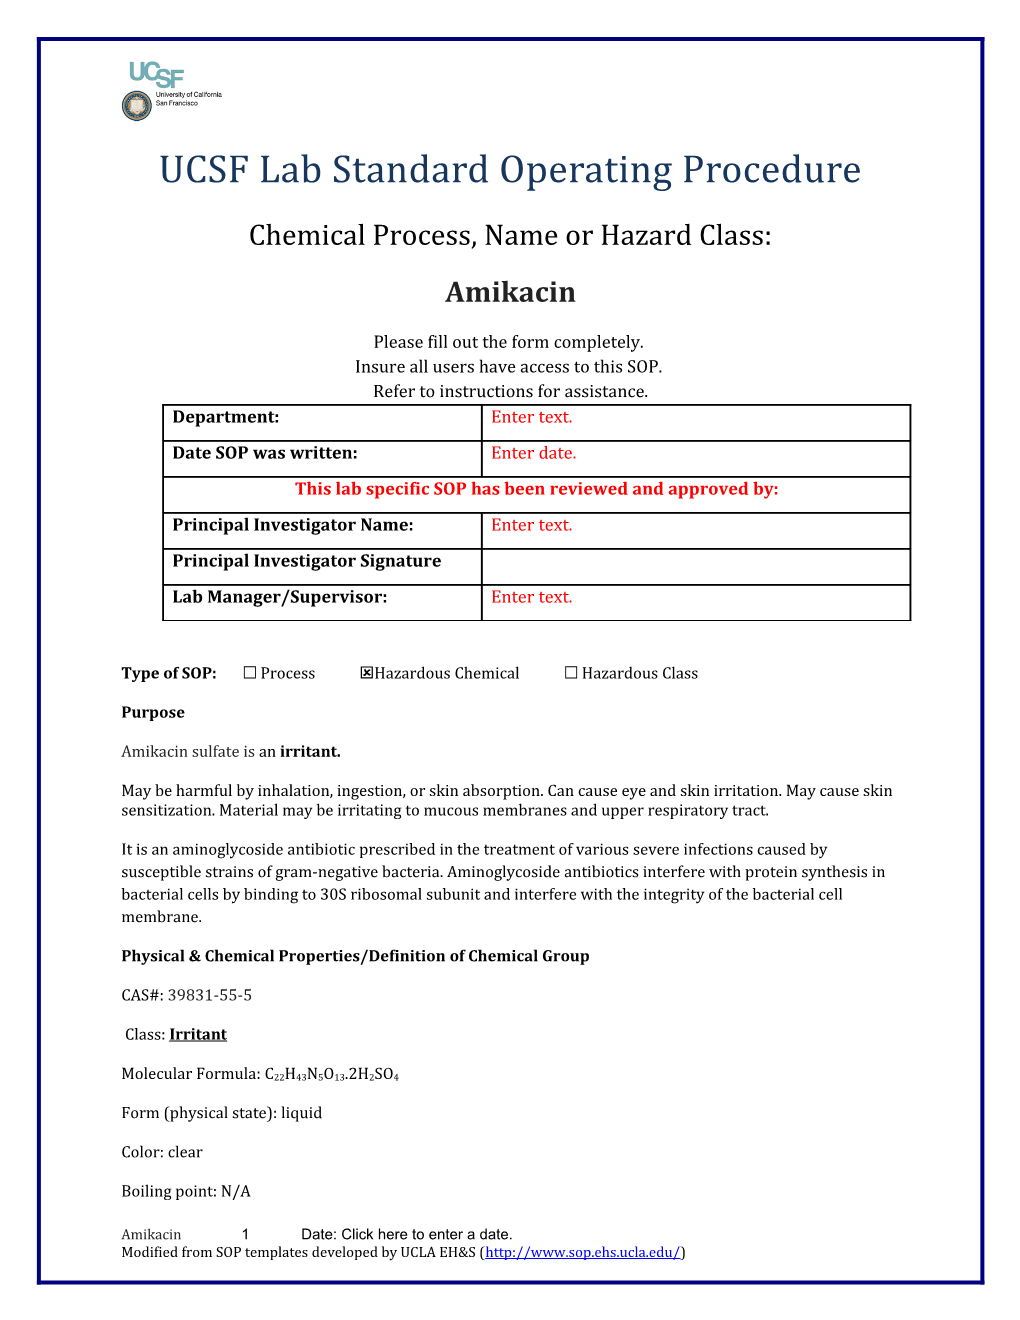 UCSF Lab Standard Operating Procedure s43